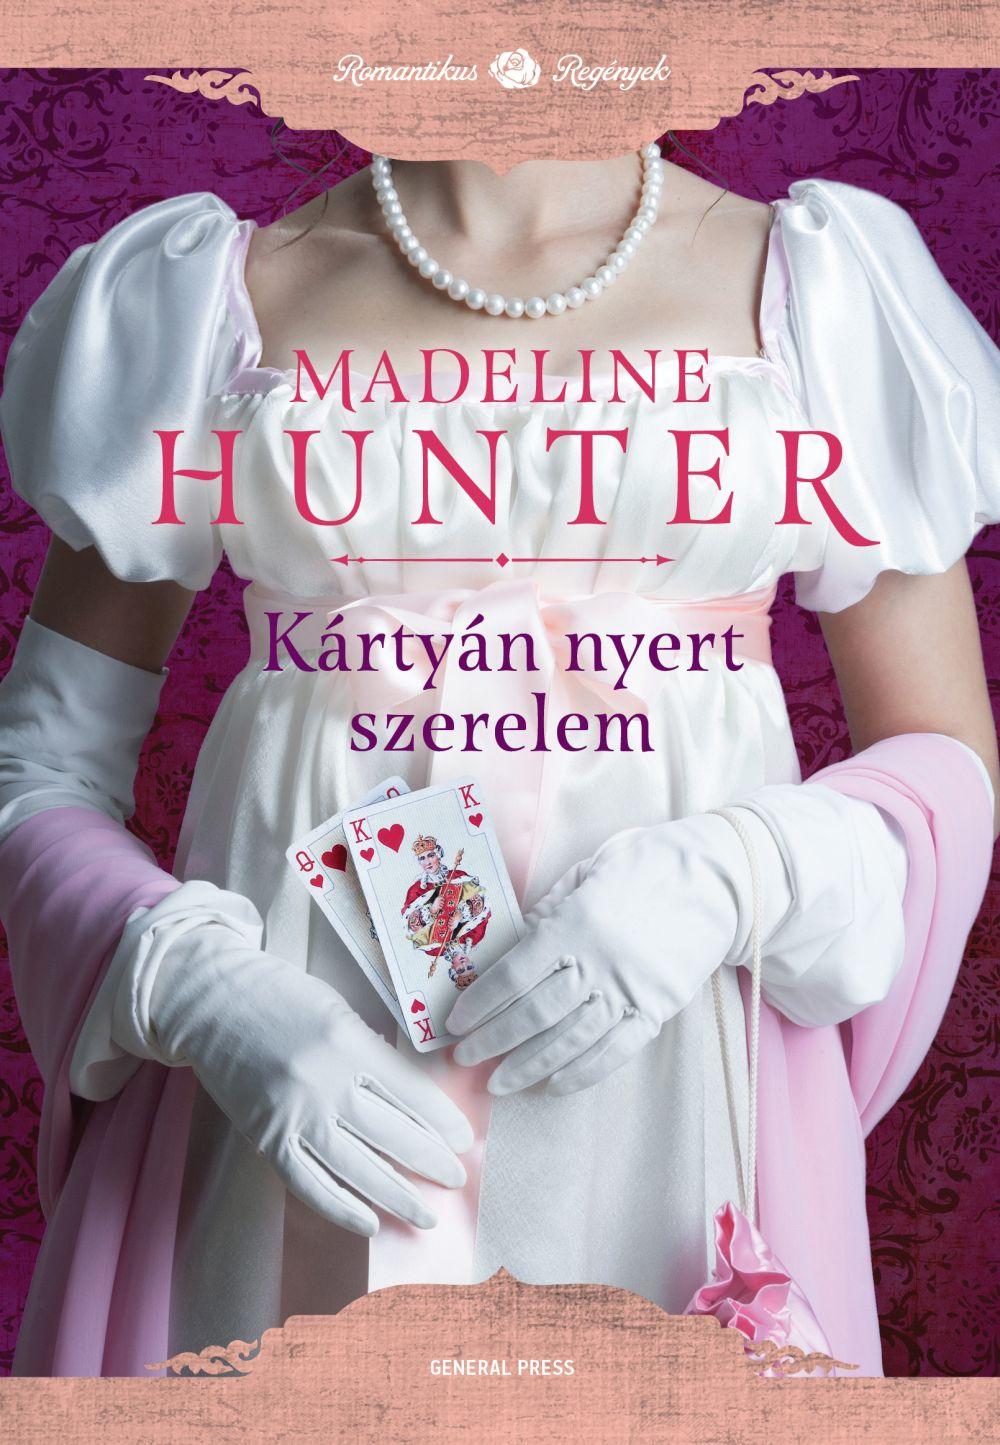 Madeline Hunter - Kártyán nyert szerelem [outlet]